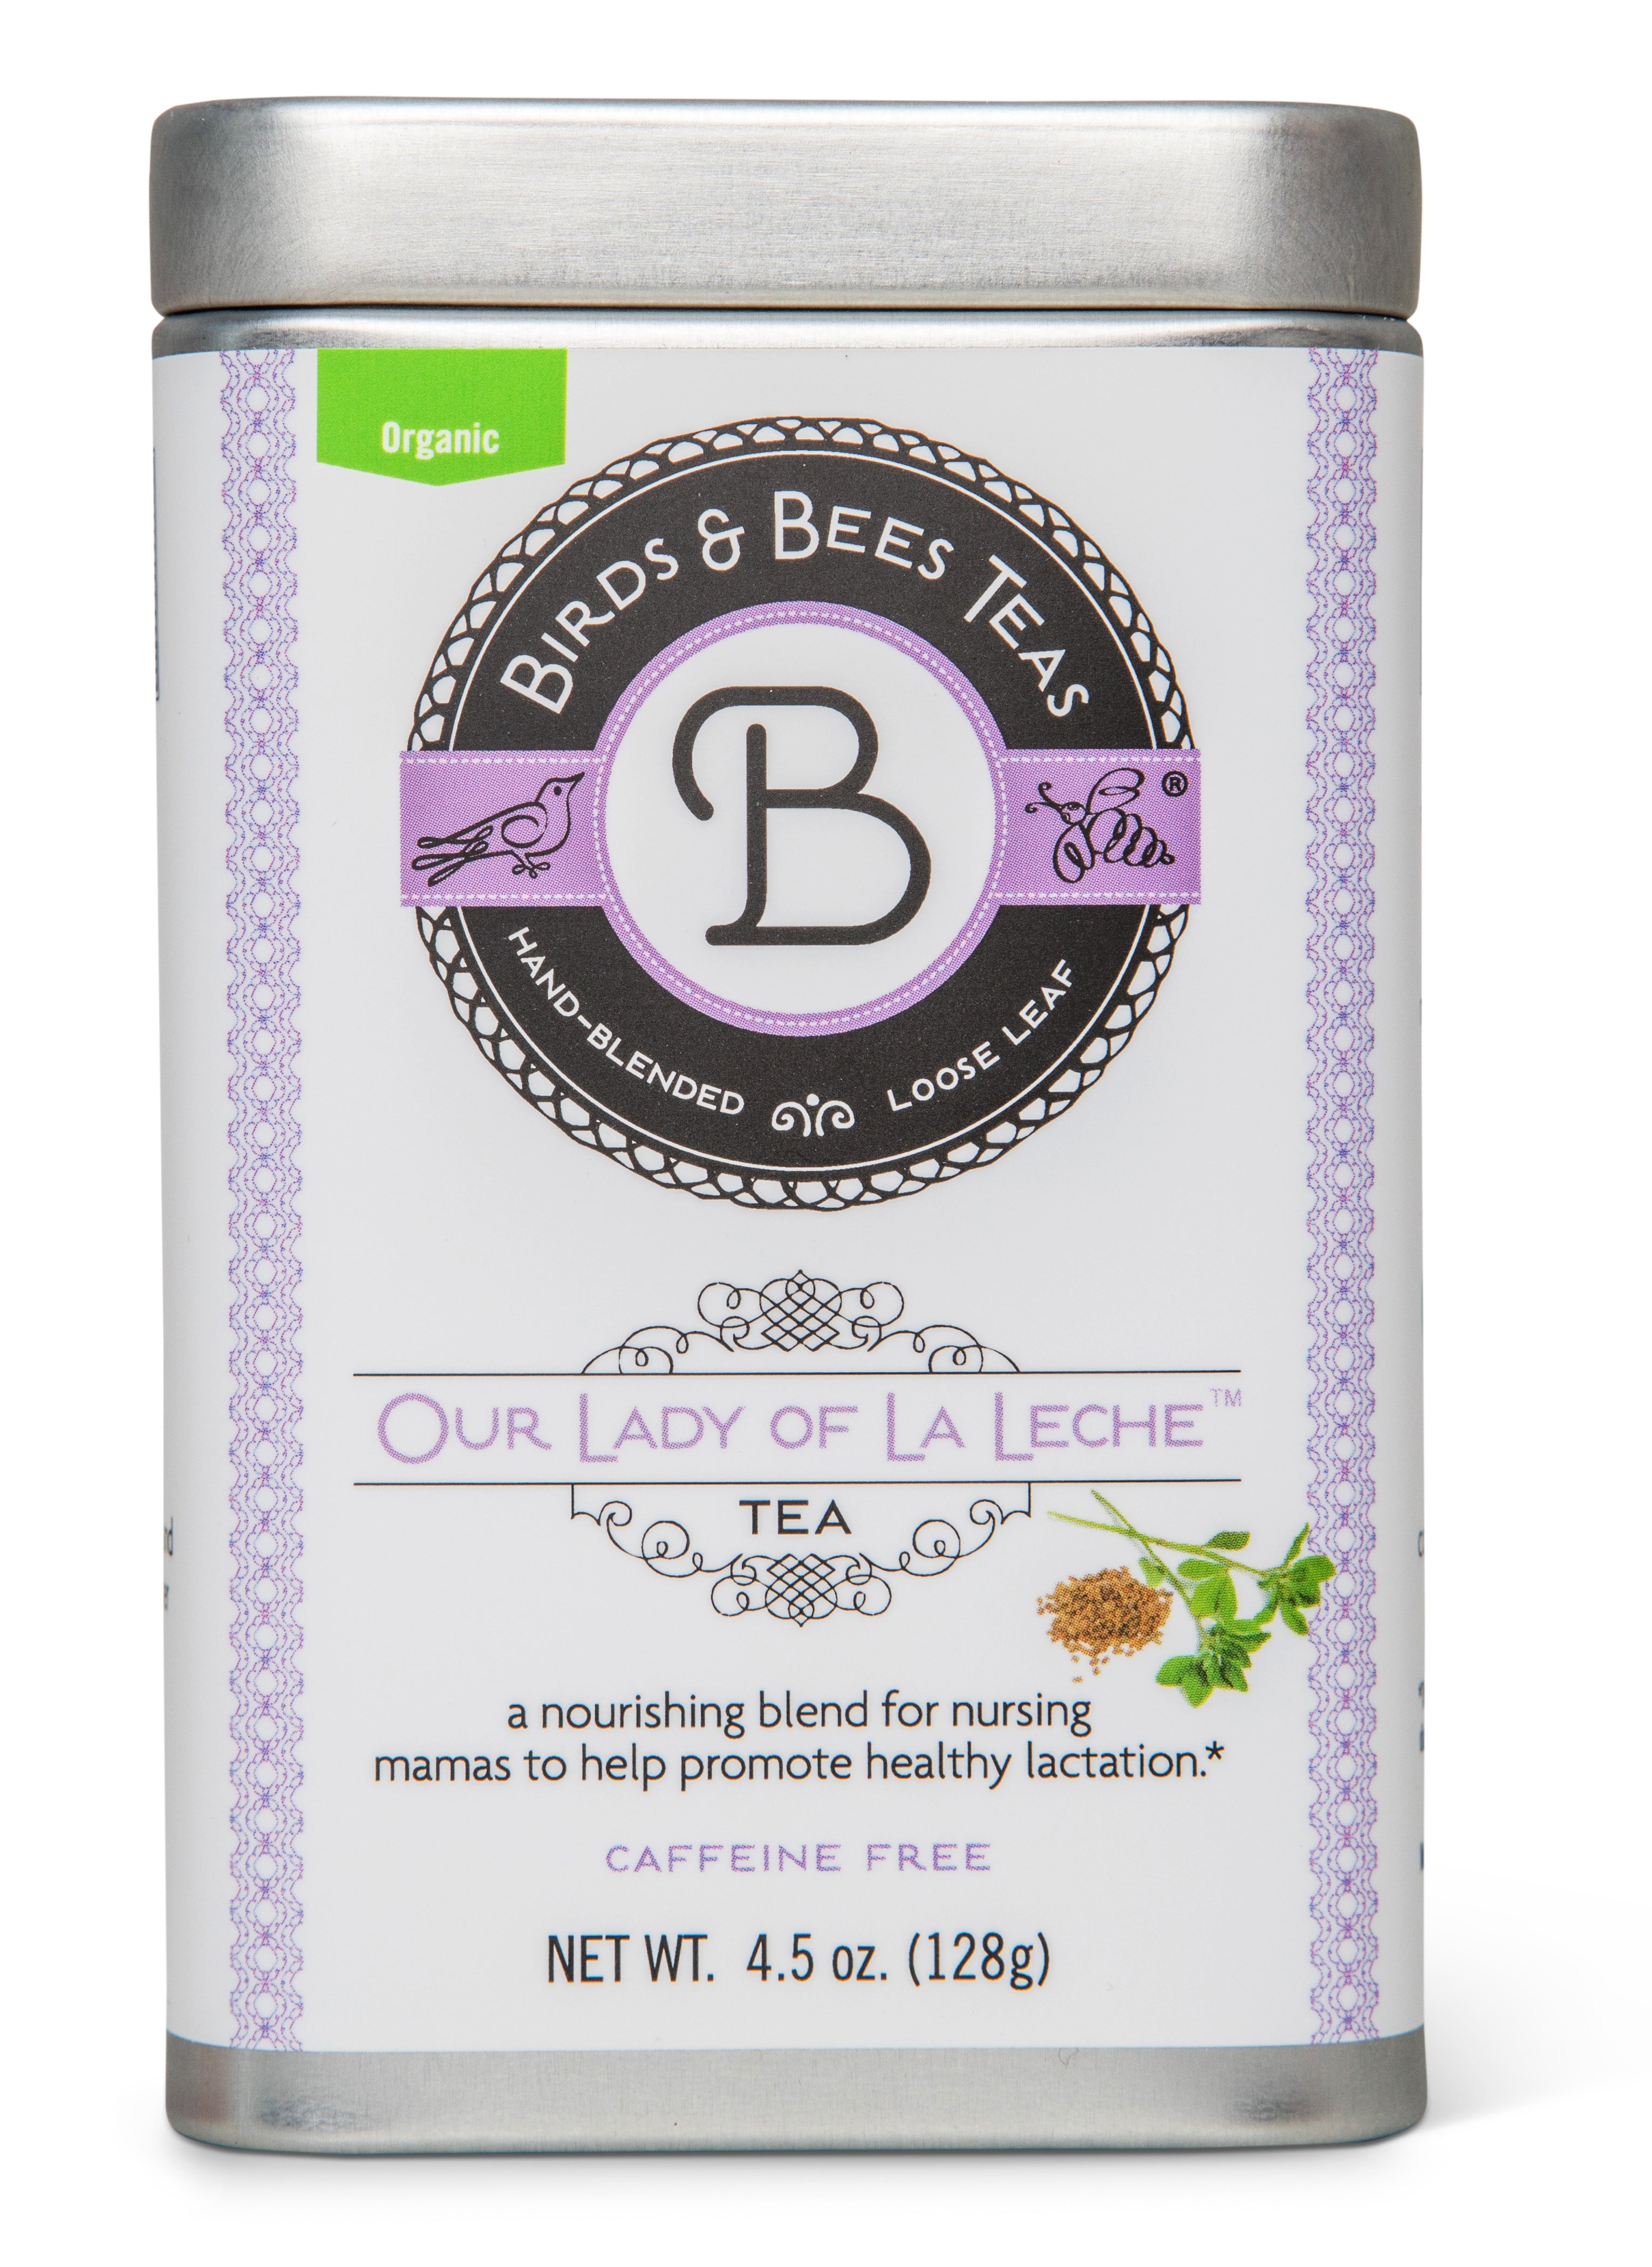 Our Lady of La Leche Organic Tea